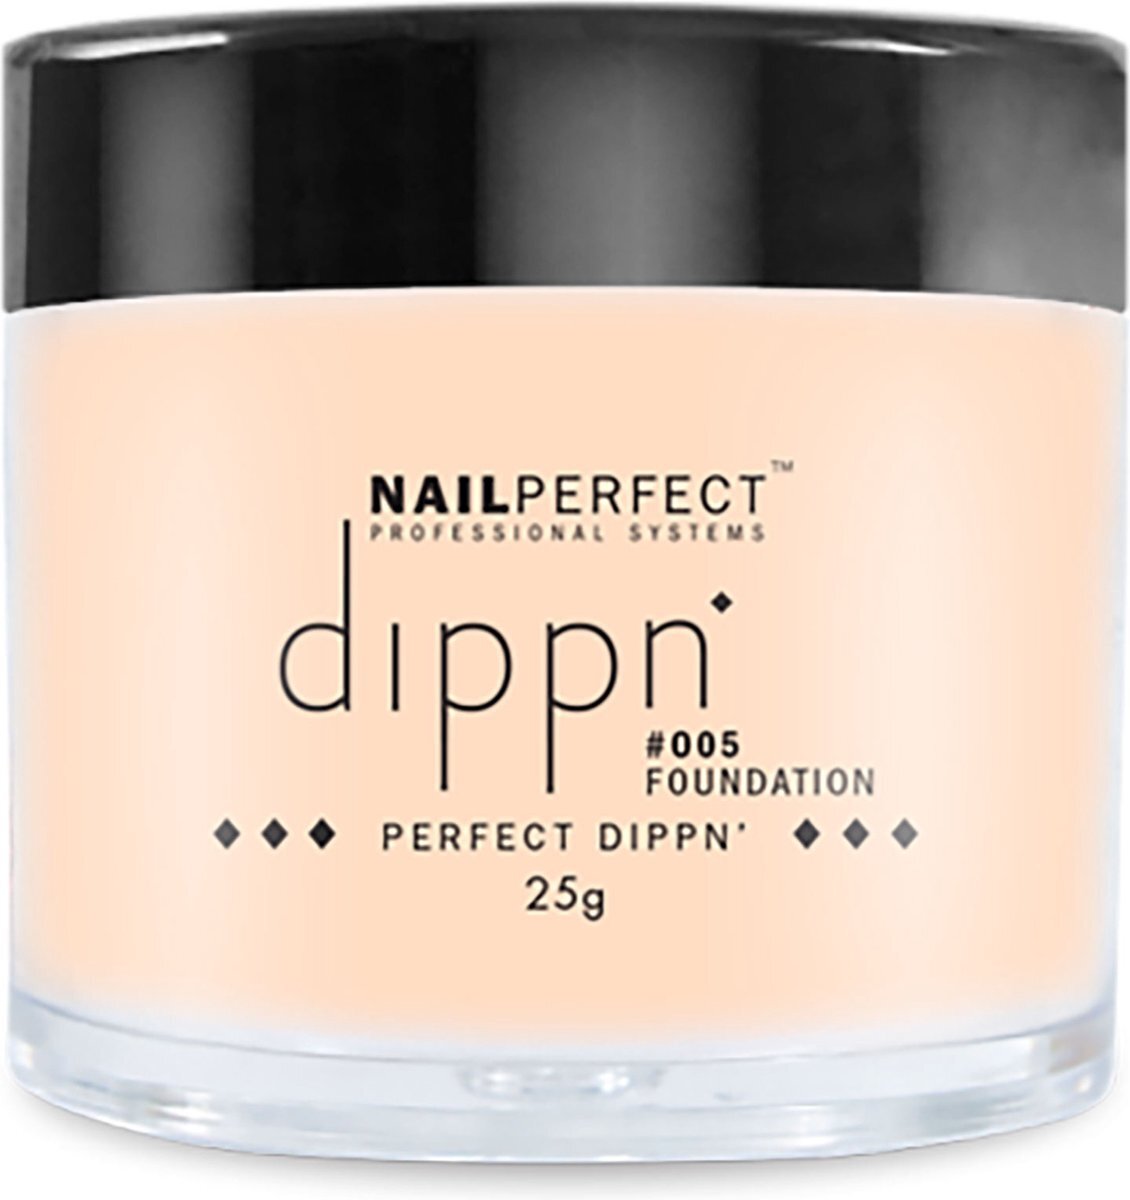 Nailperfect Nail Perfect - Dippn - #005 Foundation - 25gr